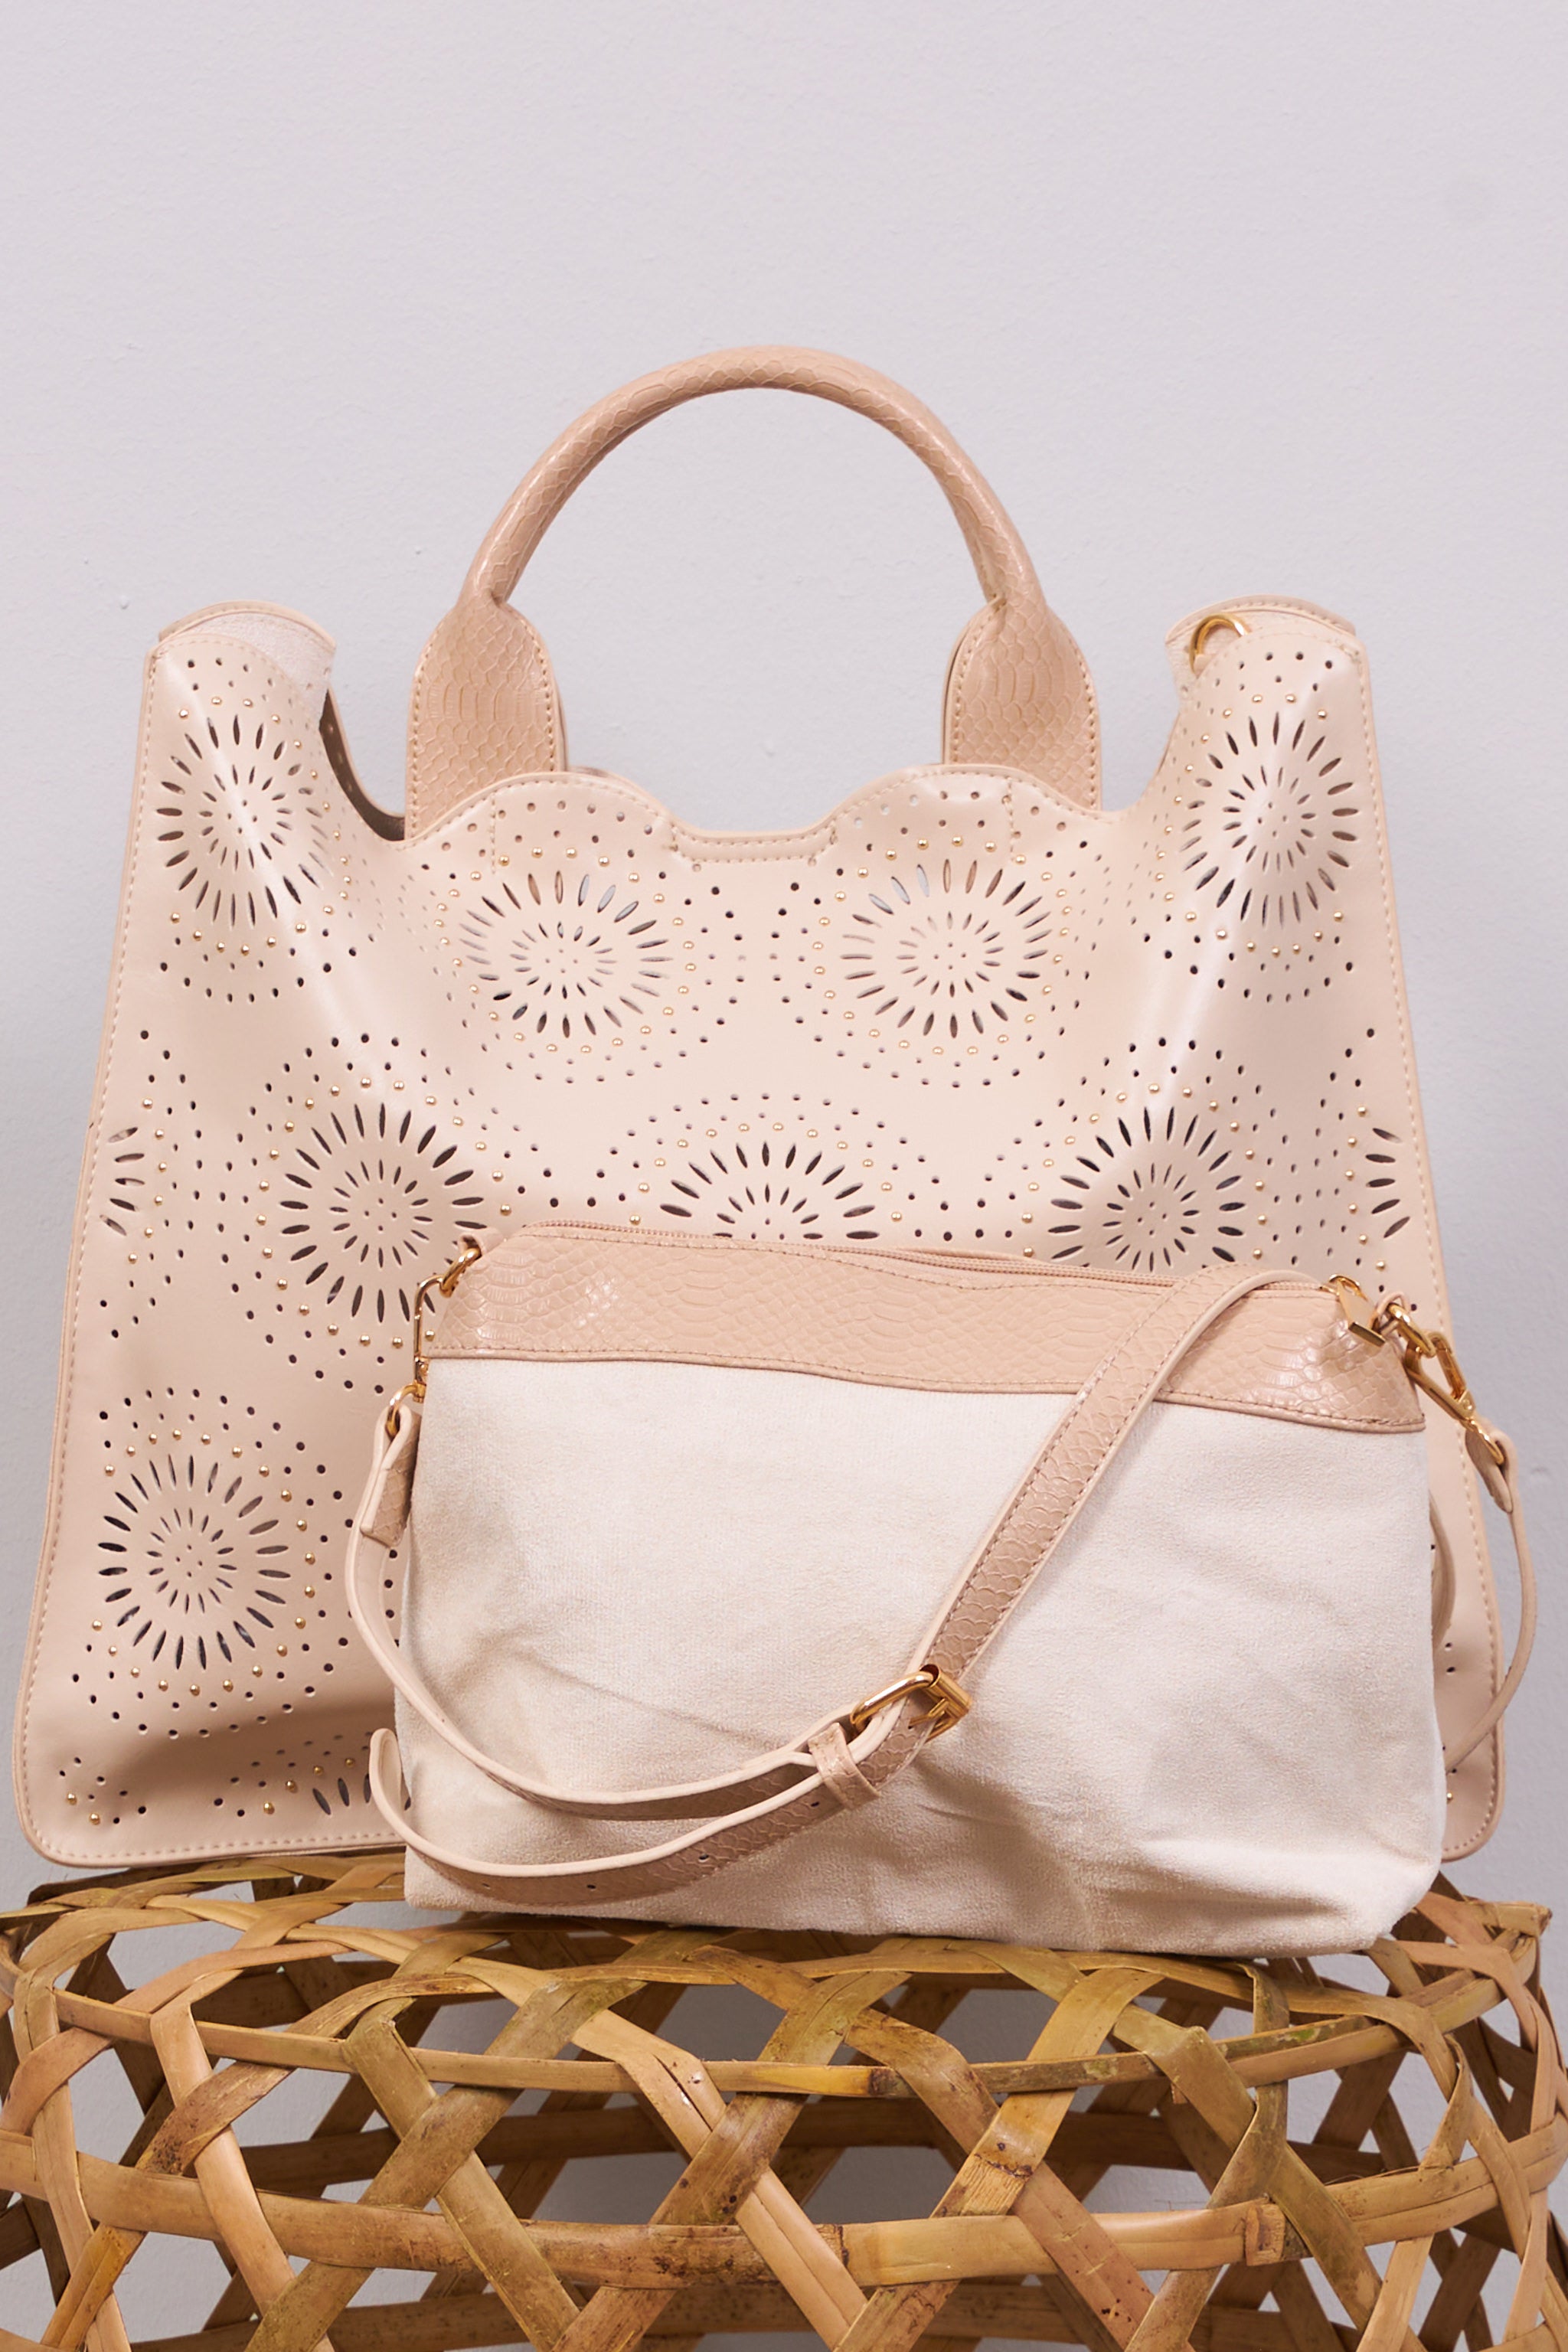 Shopper bag in bag with circle motif, beige